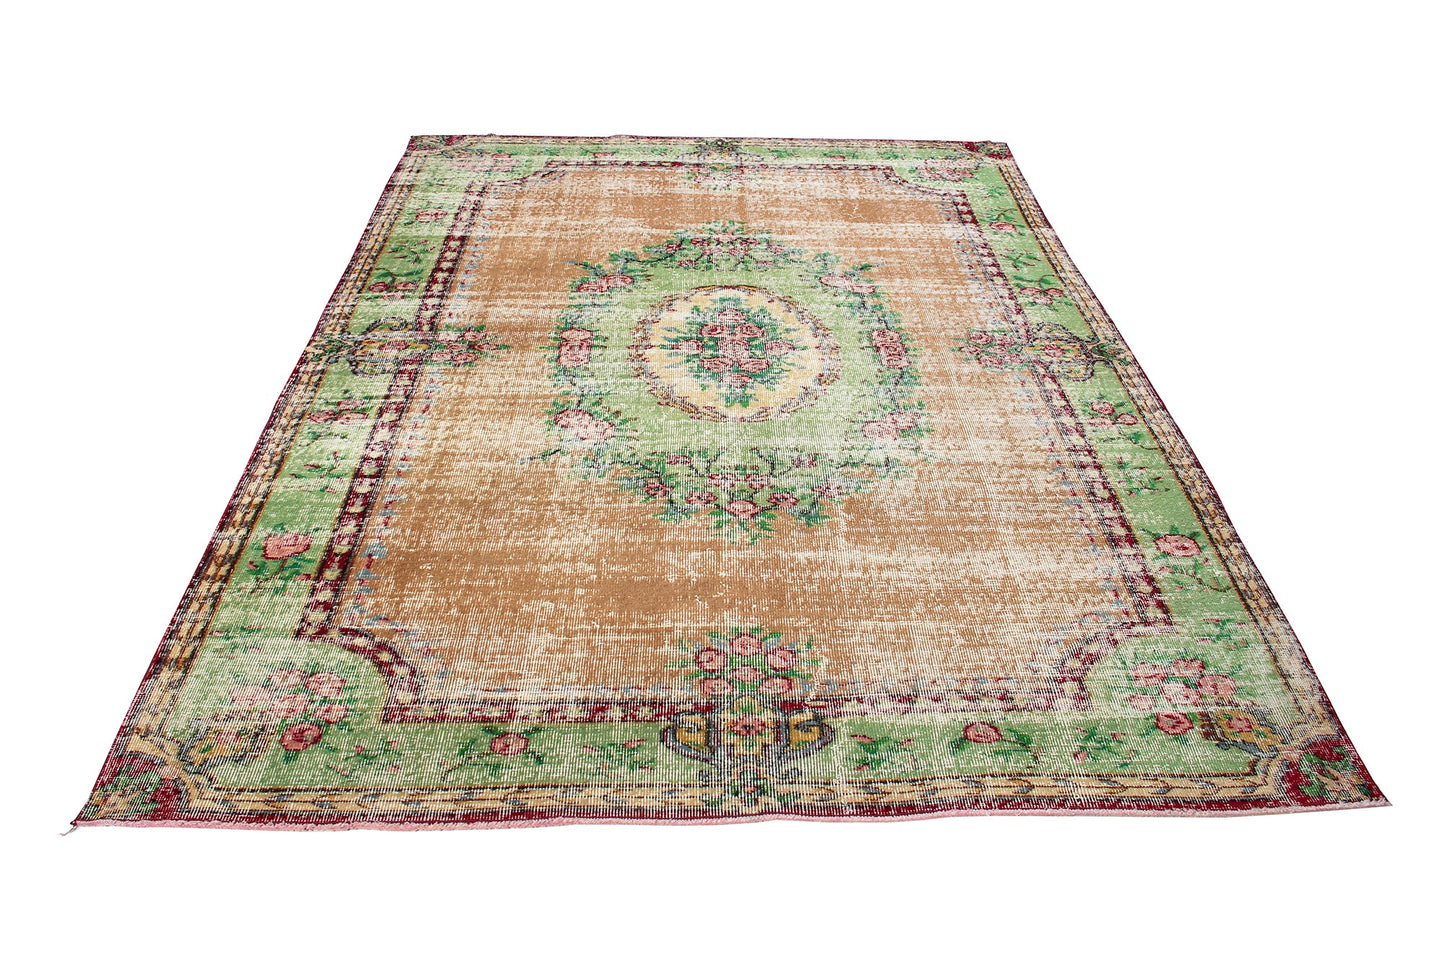 Vintage Handwoven Wool Turkish Carpet product image #27555832529066